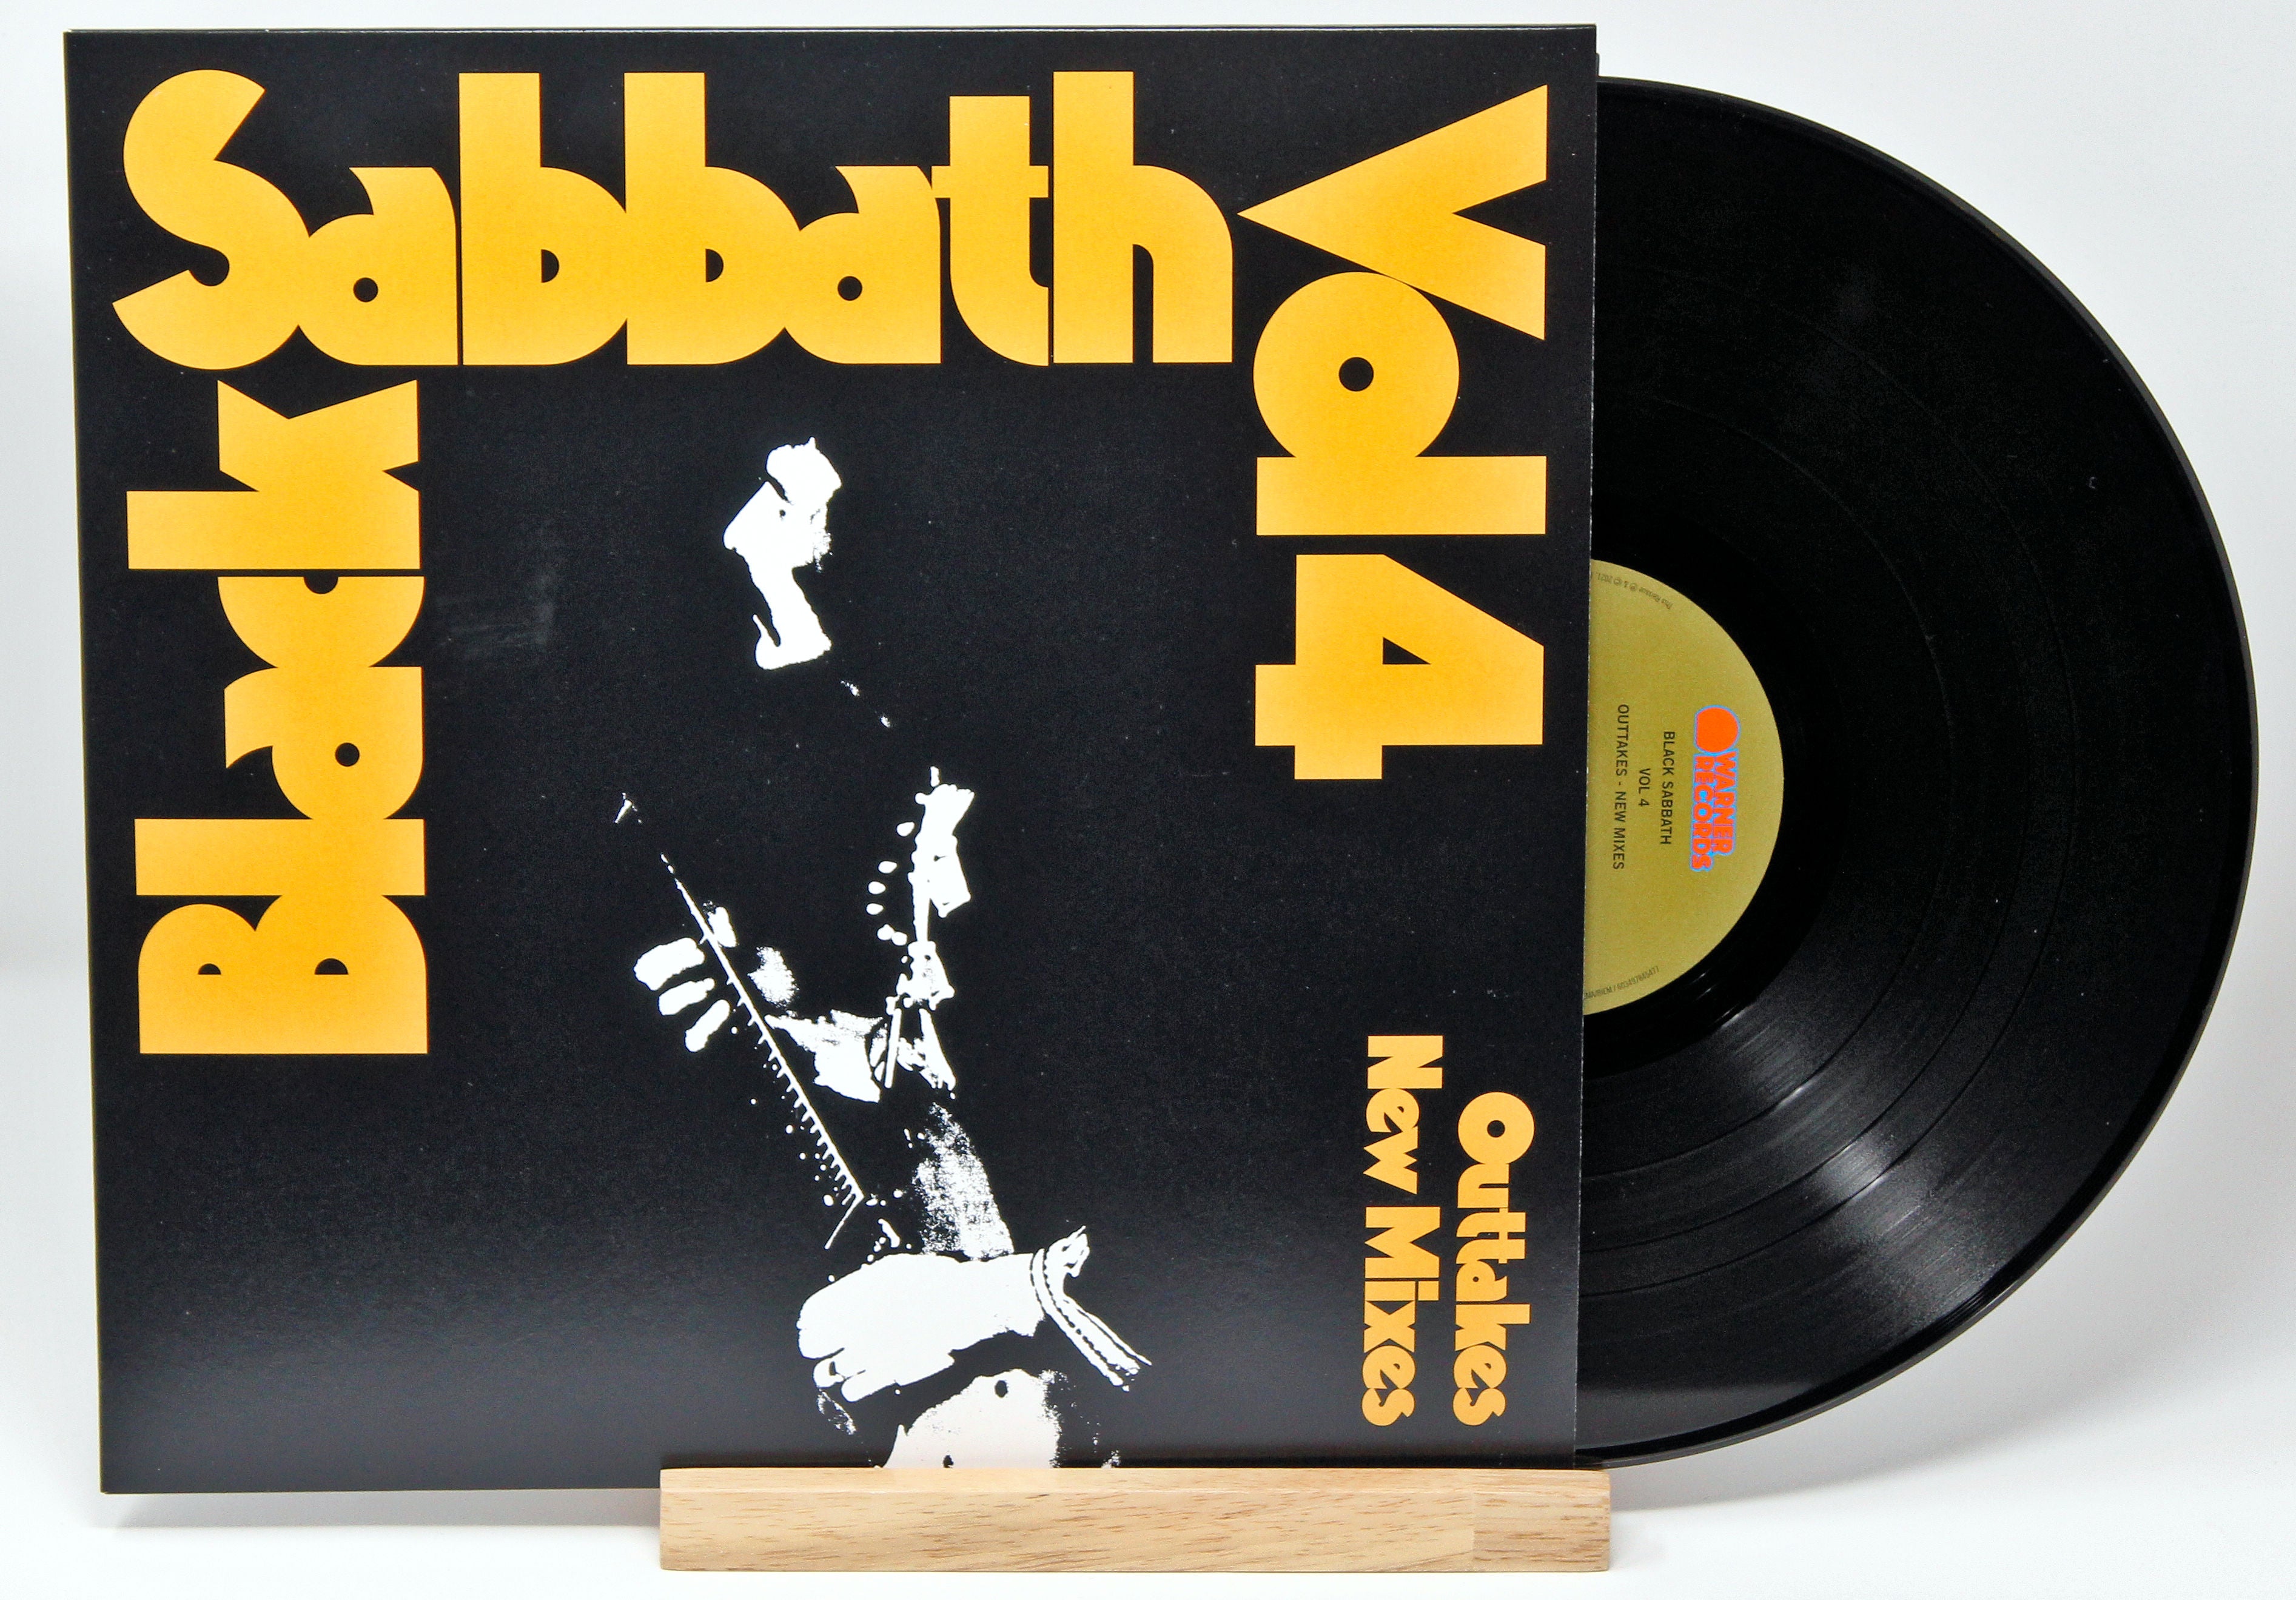 Black Sabbath - Sabotage (Super Deluxe Edition) (4LP+7) - Vinyl 